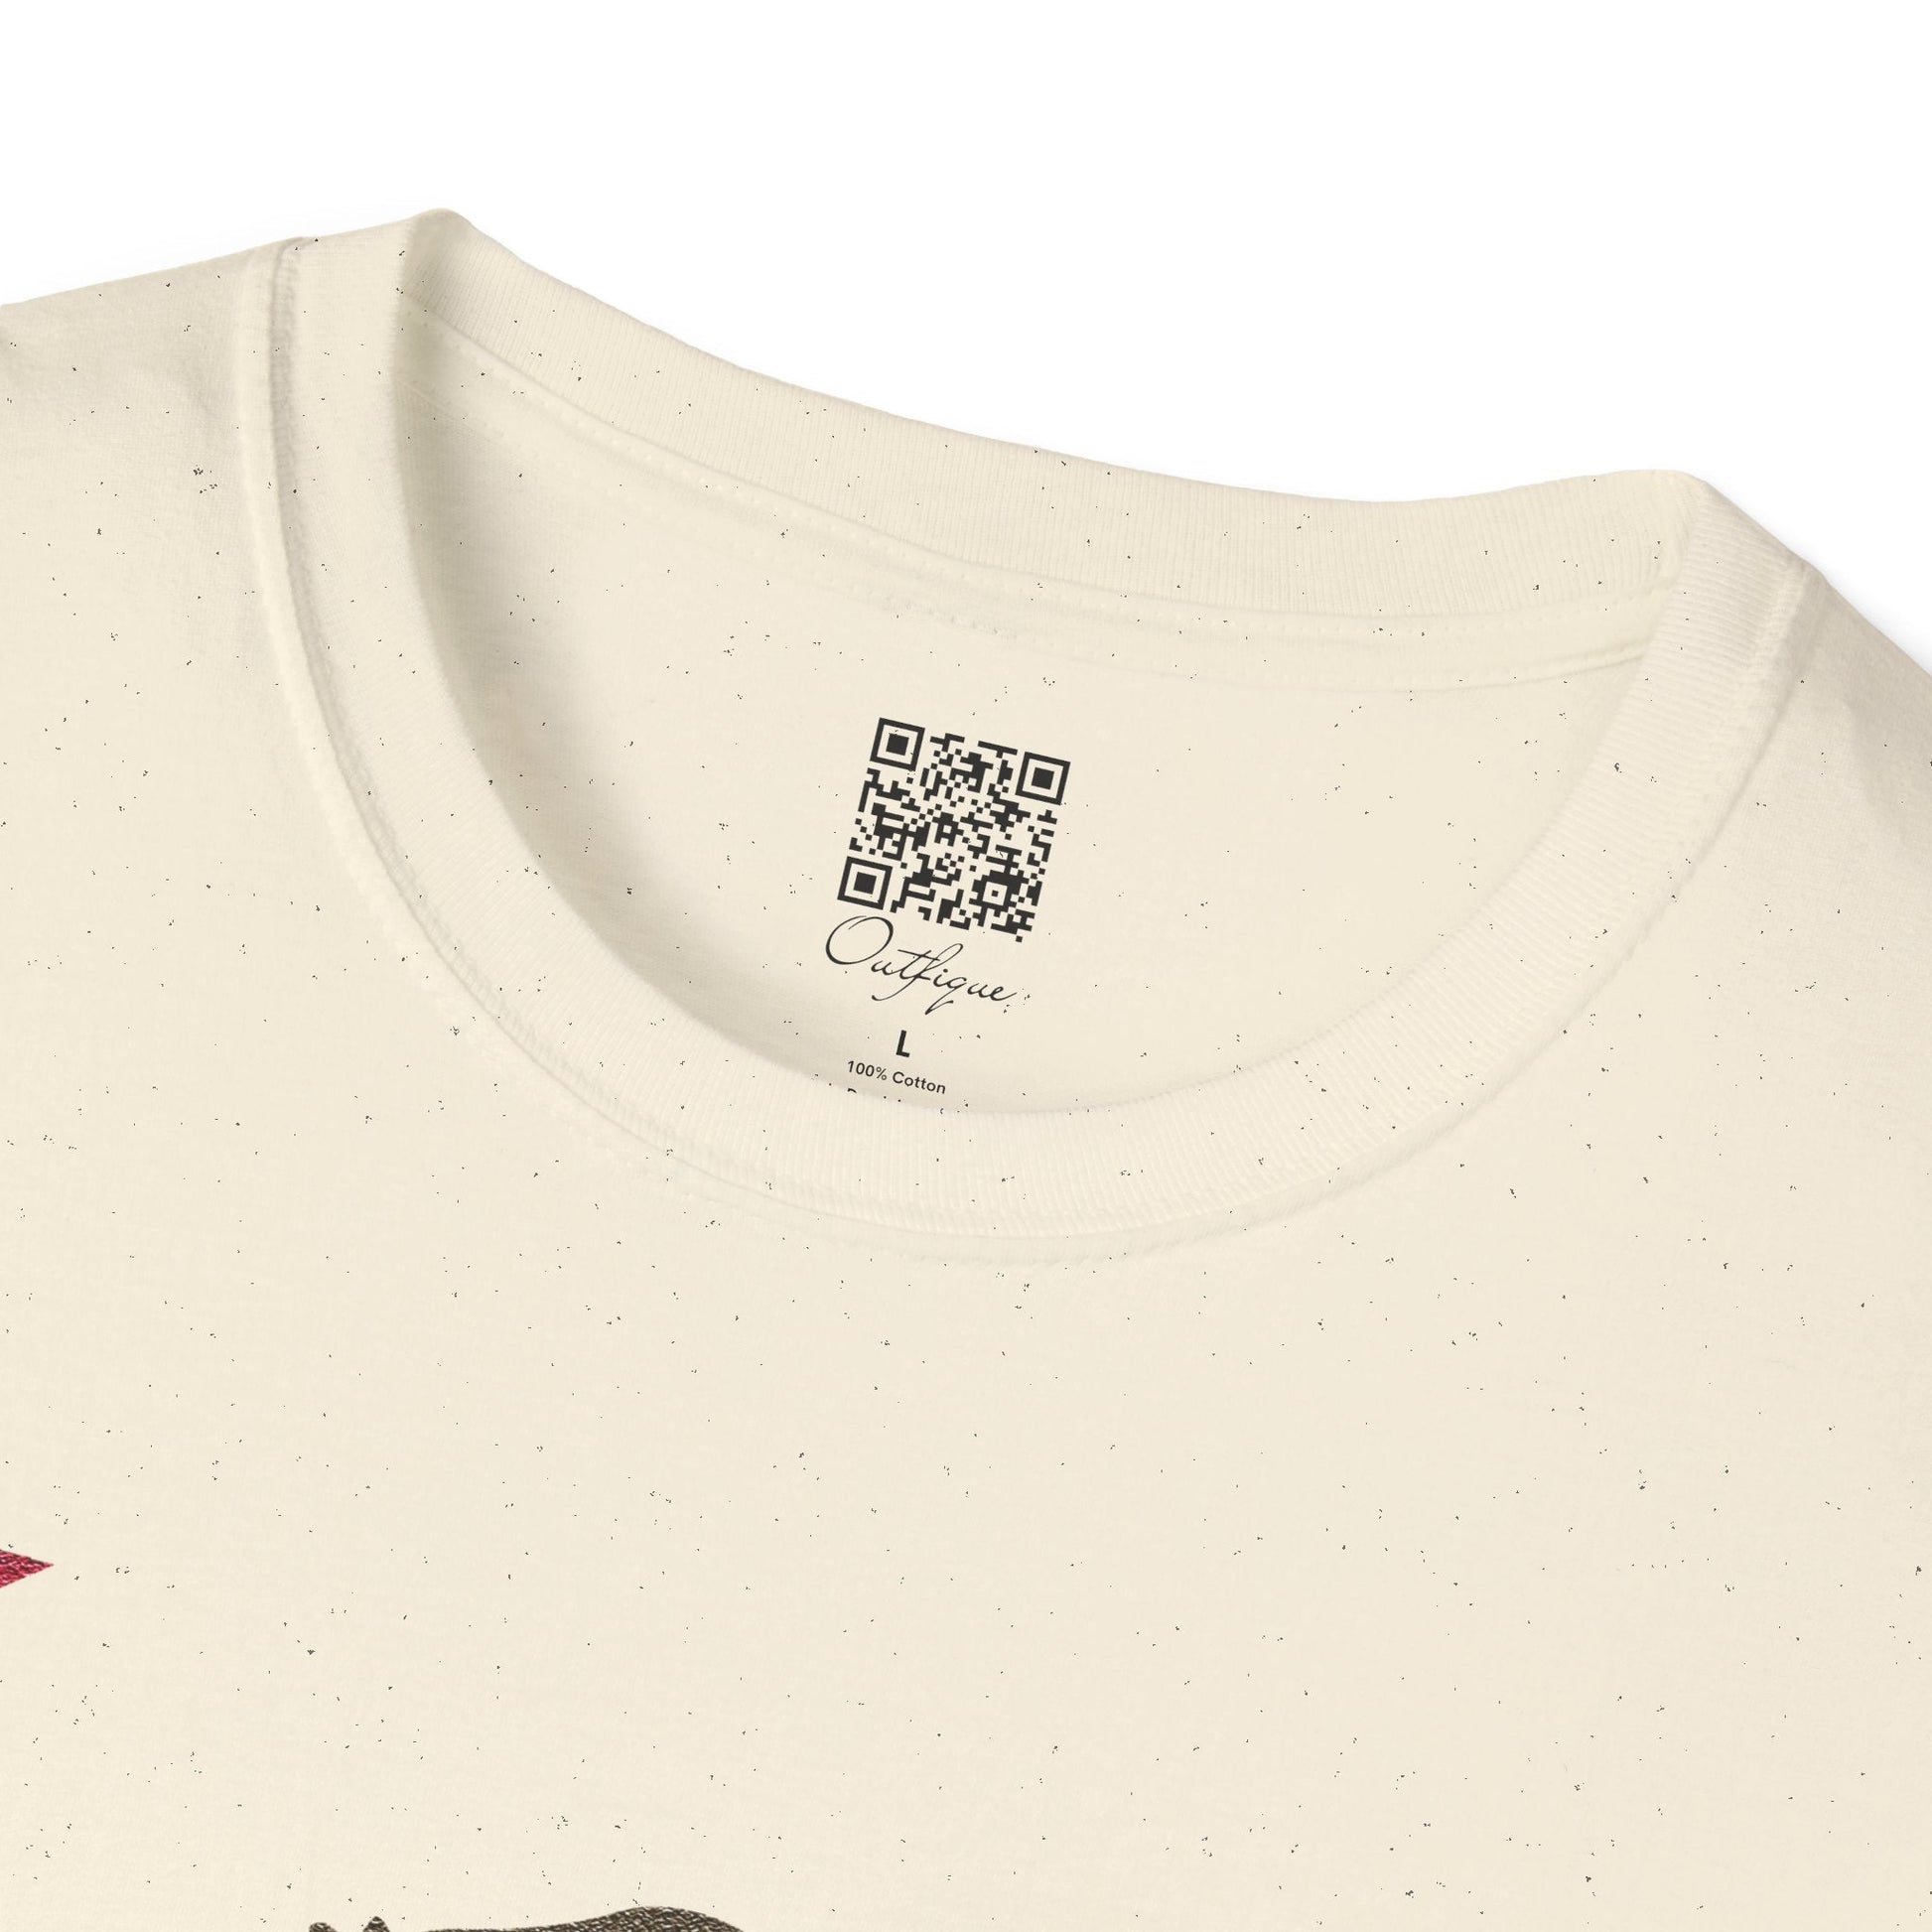 CALIBEAR T-Shirt | Outfique | T-Shirt | Crew neck